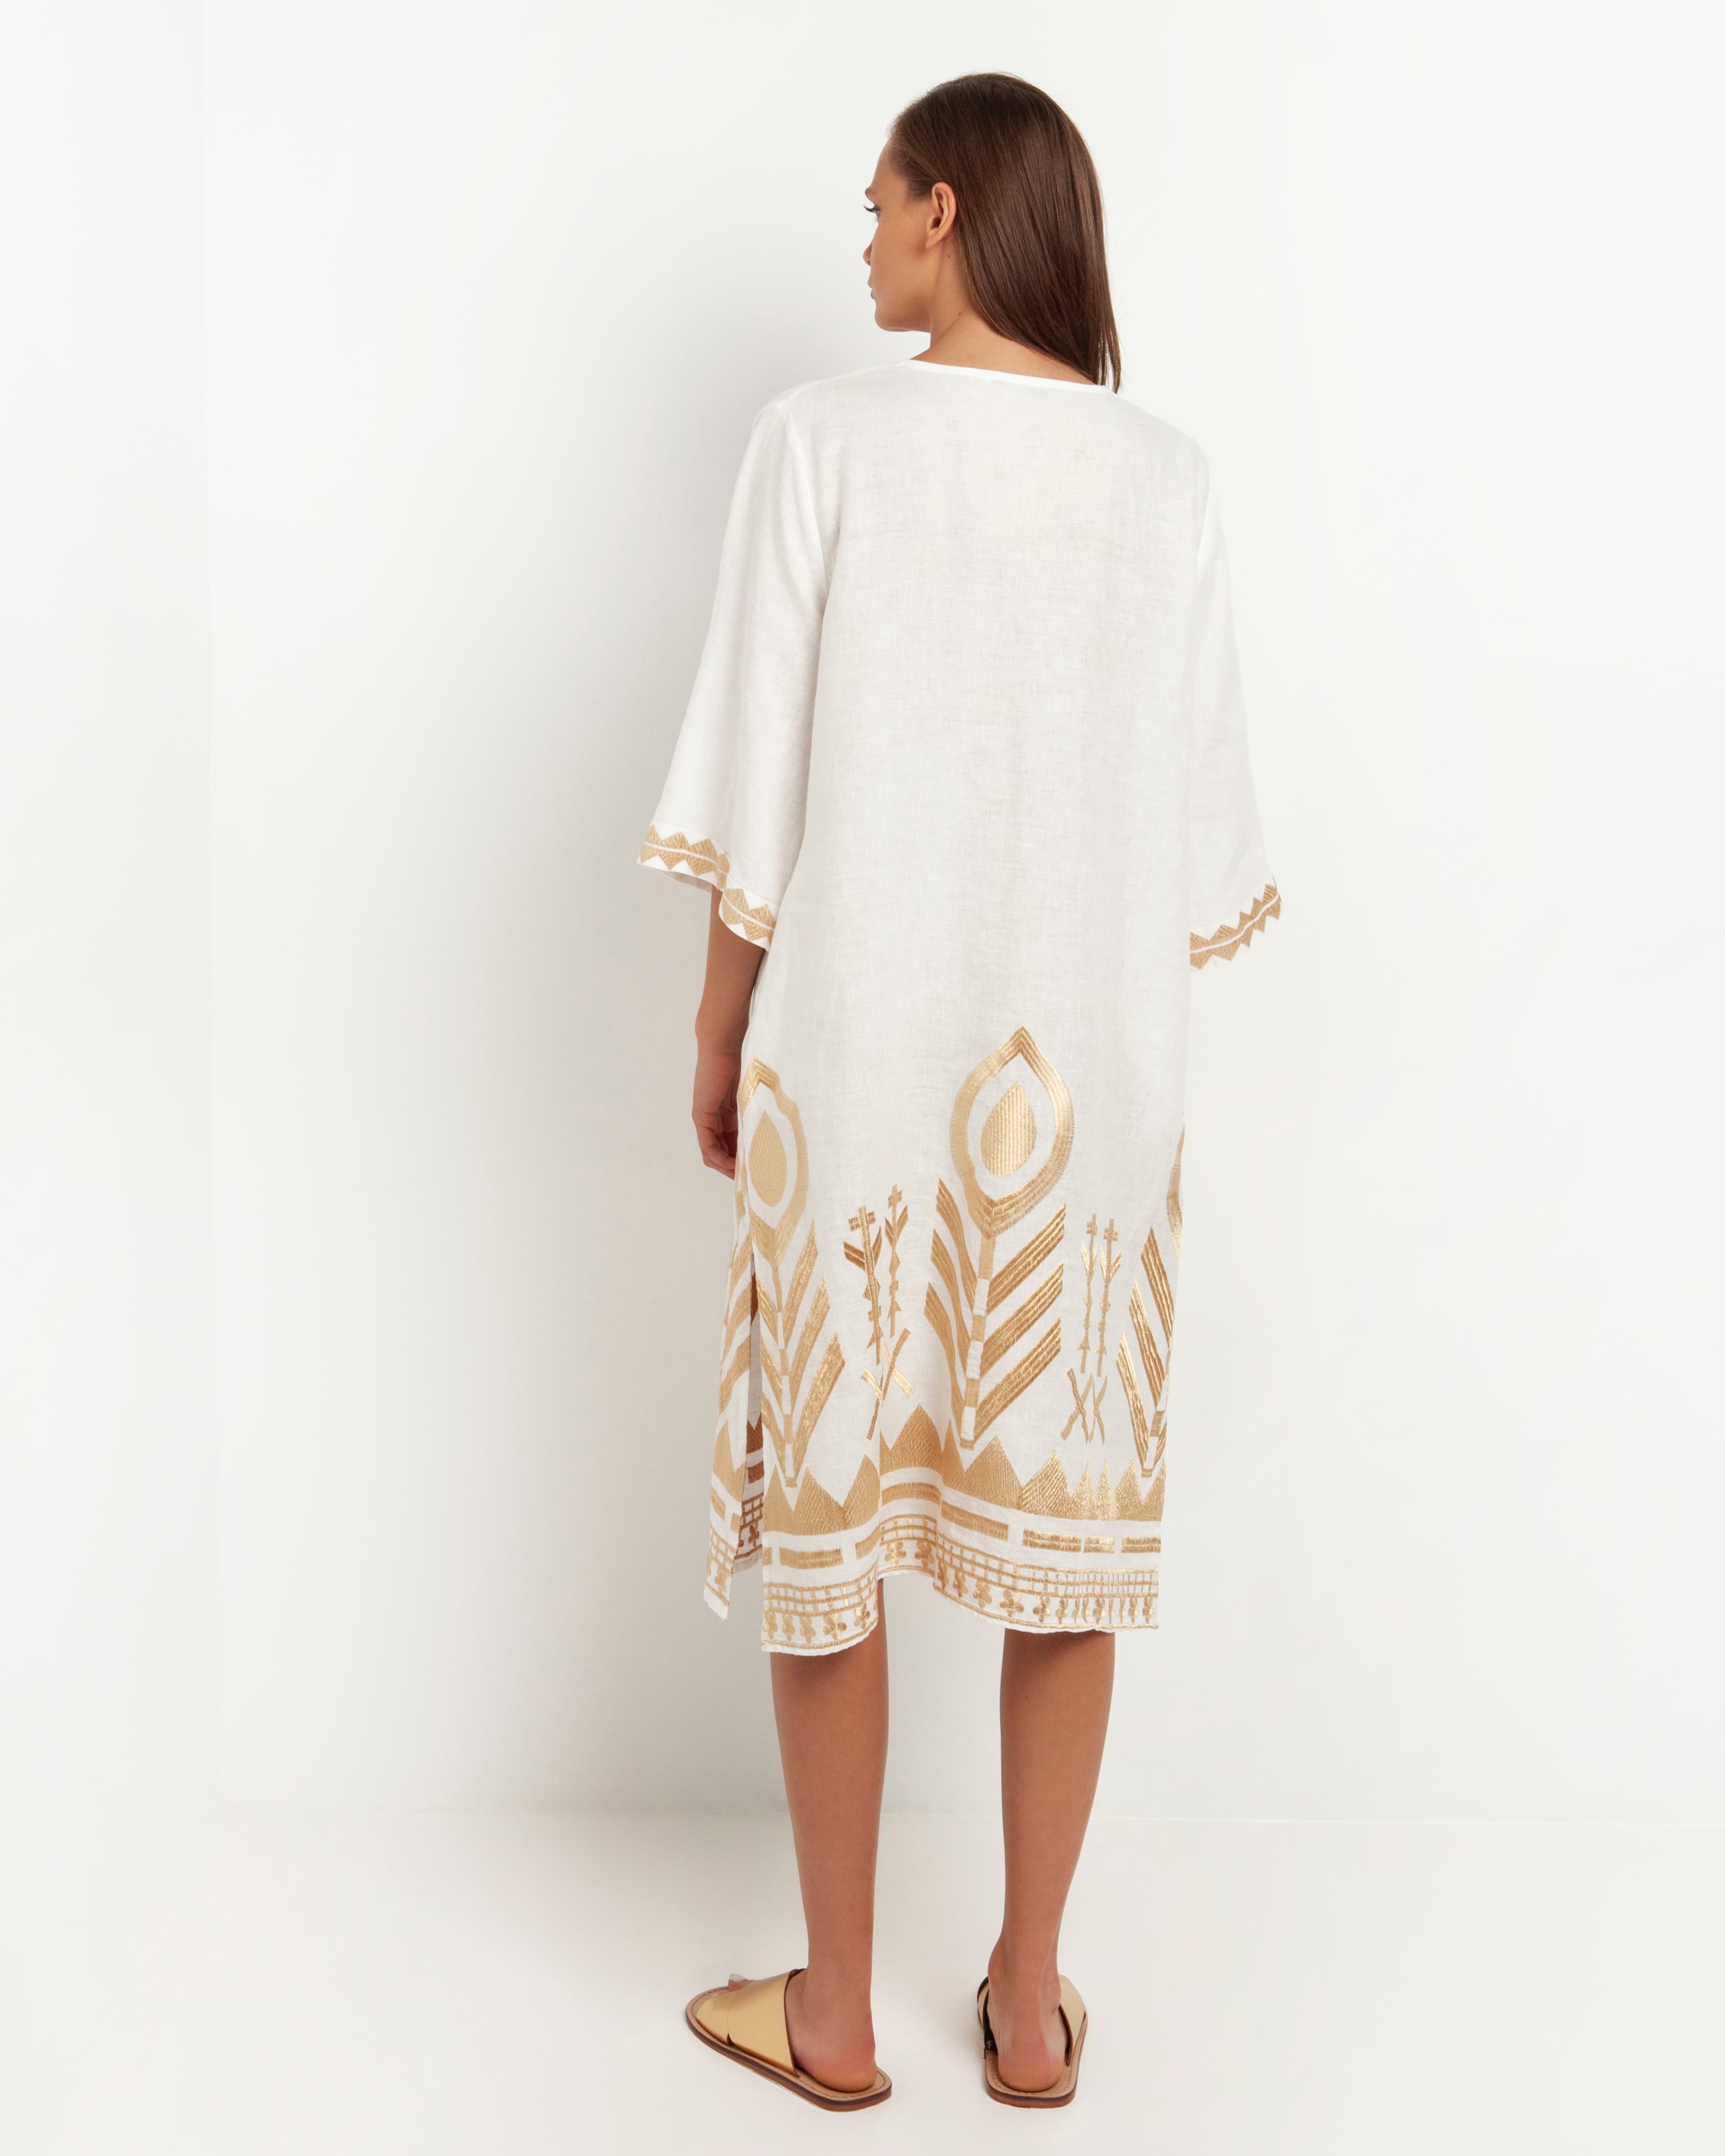 Greek Archaic Kori white and gold dress